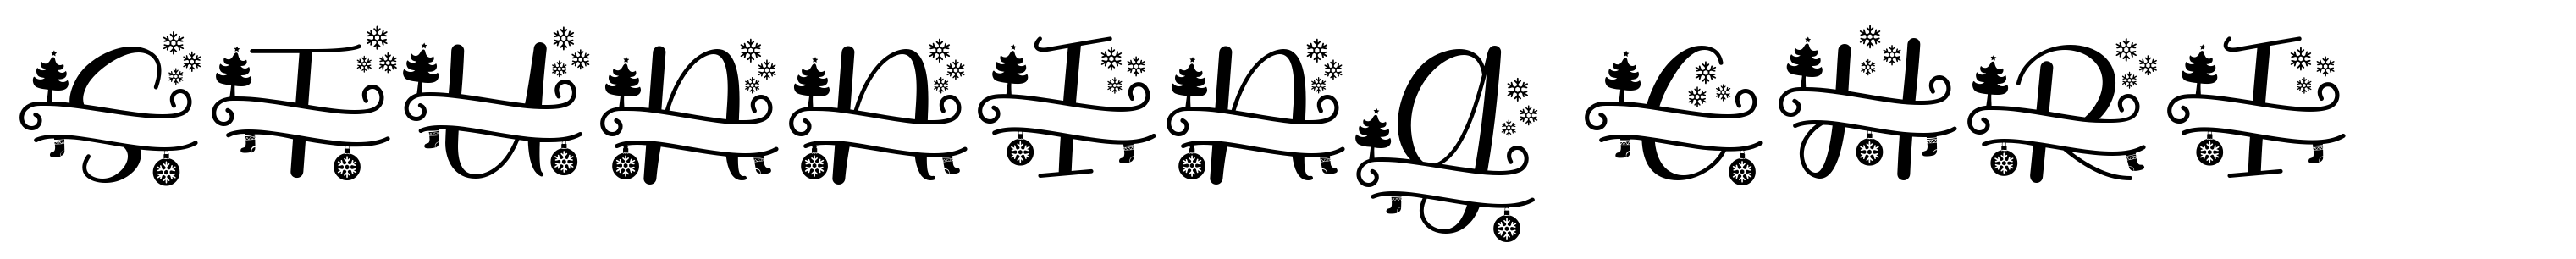 Stunning Christmas Monogram